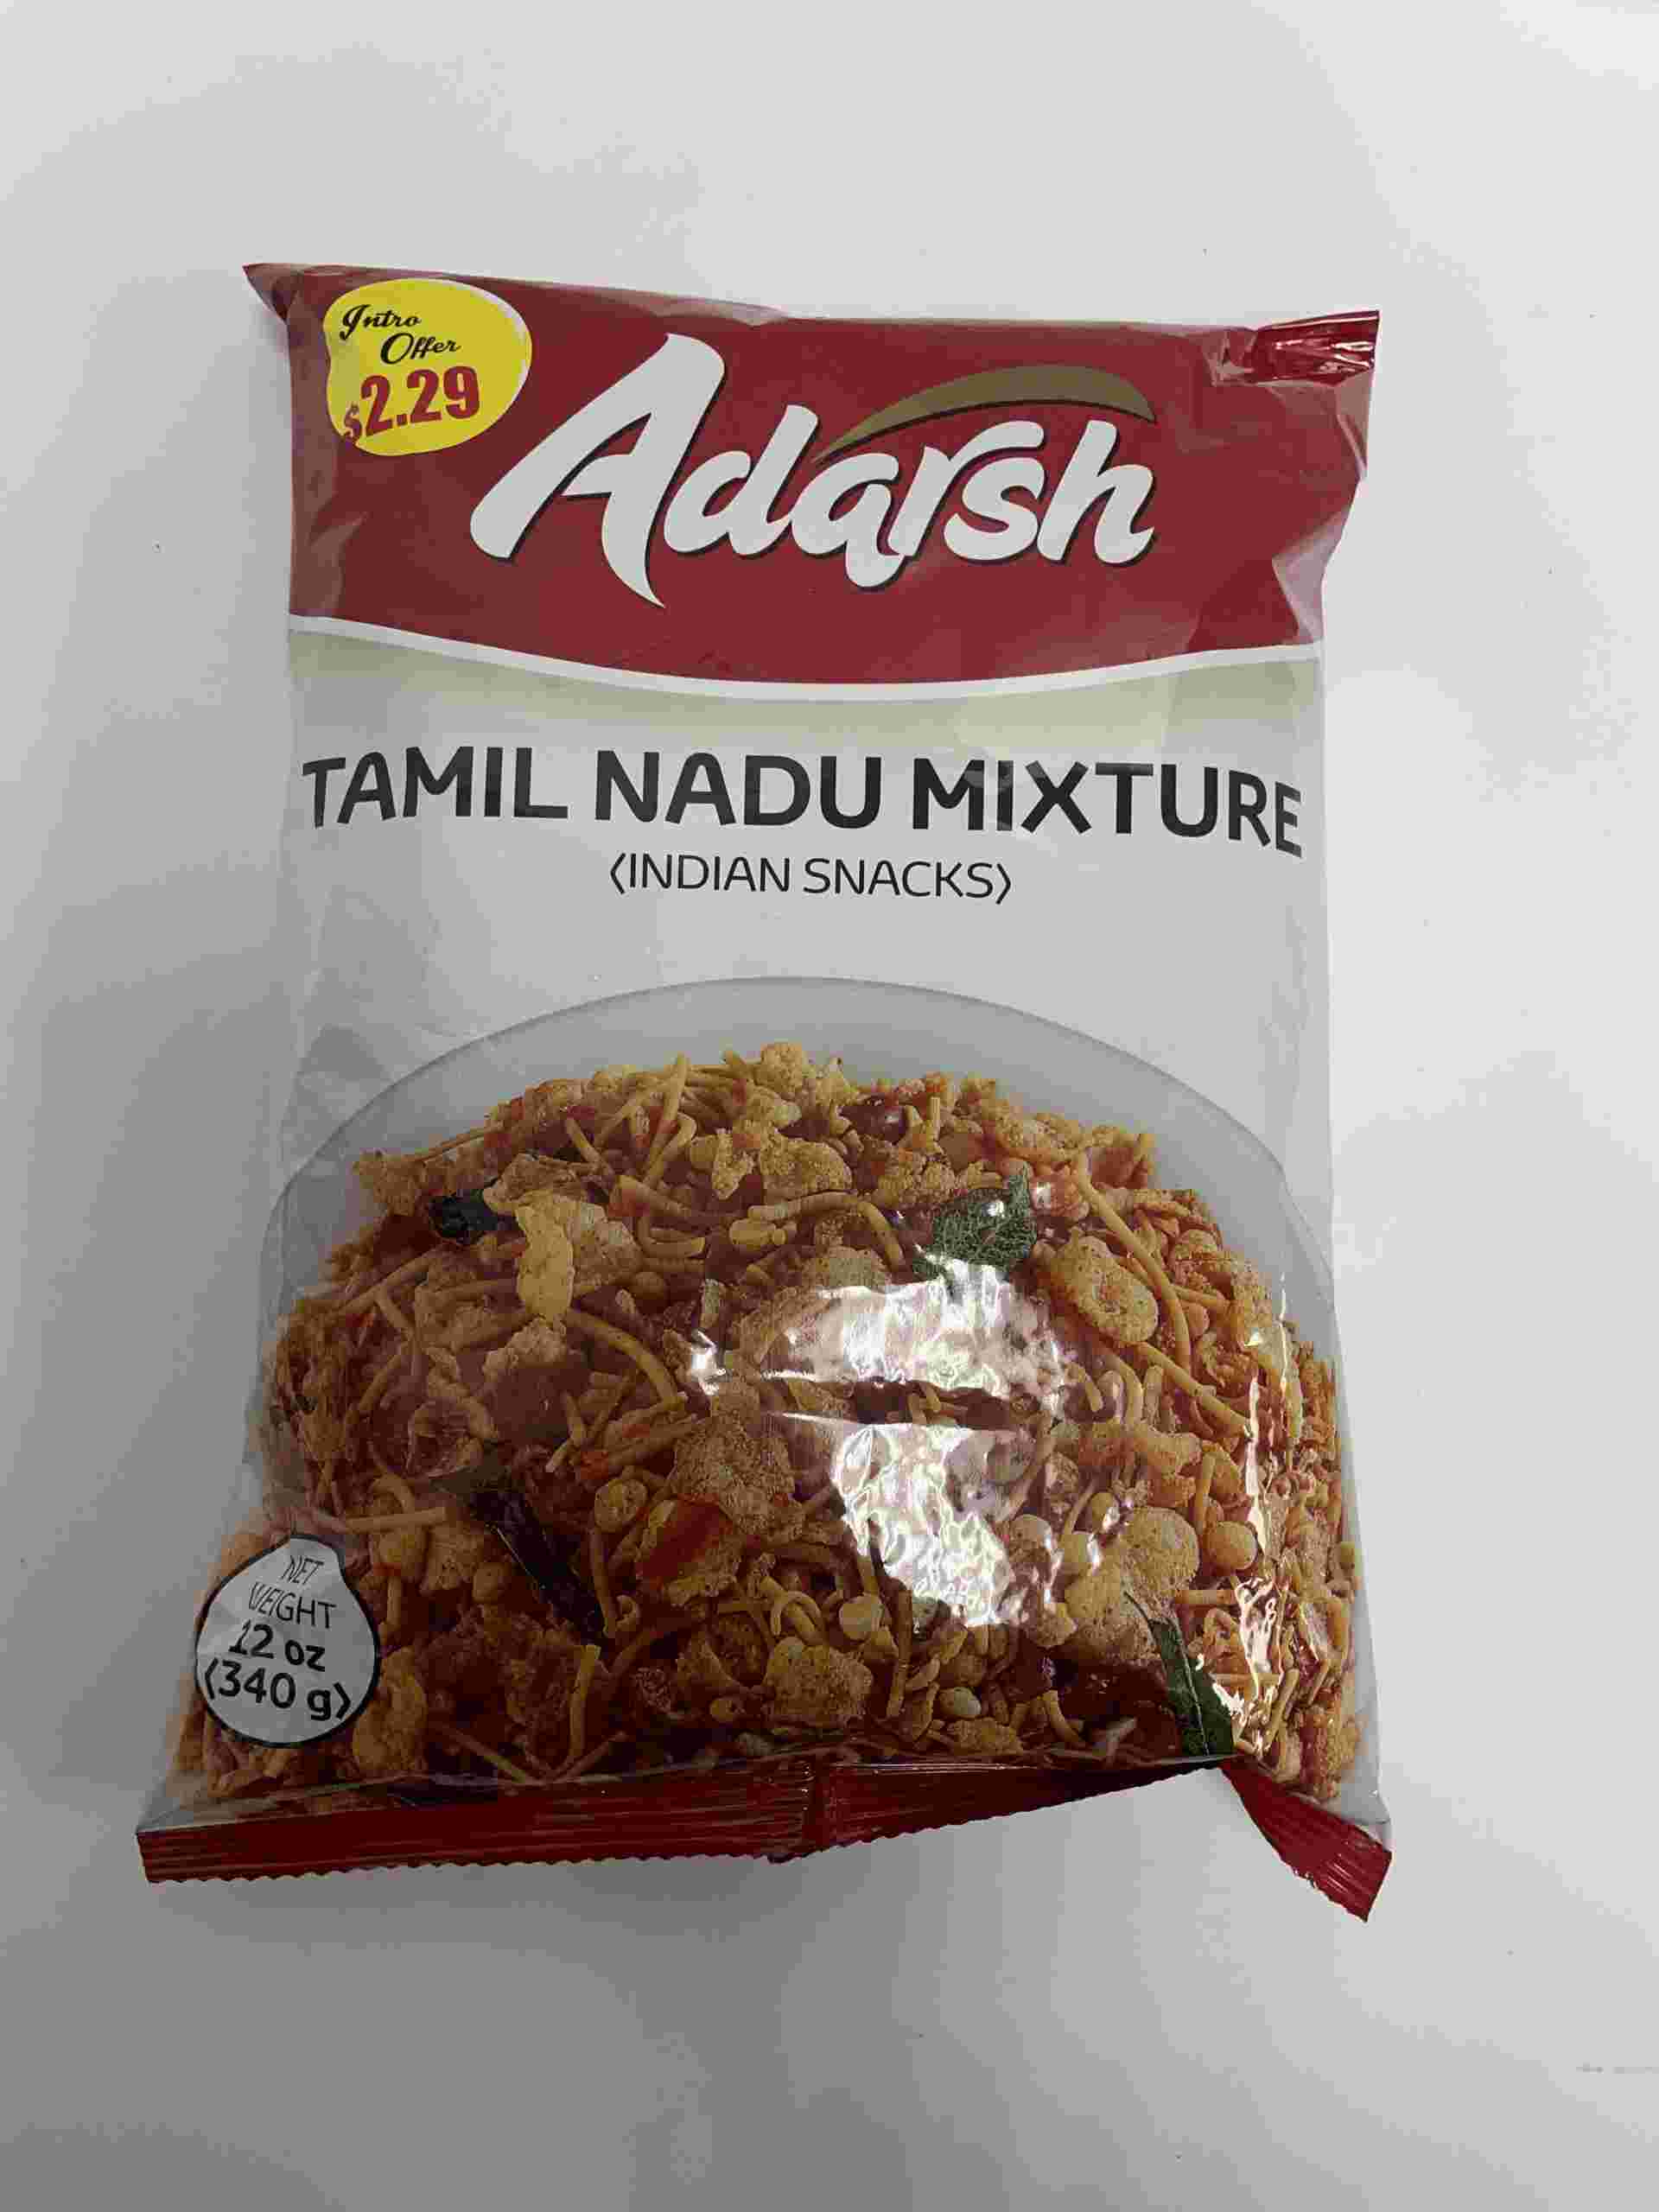 Adarsh Tamil Nadu Mixture